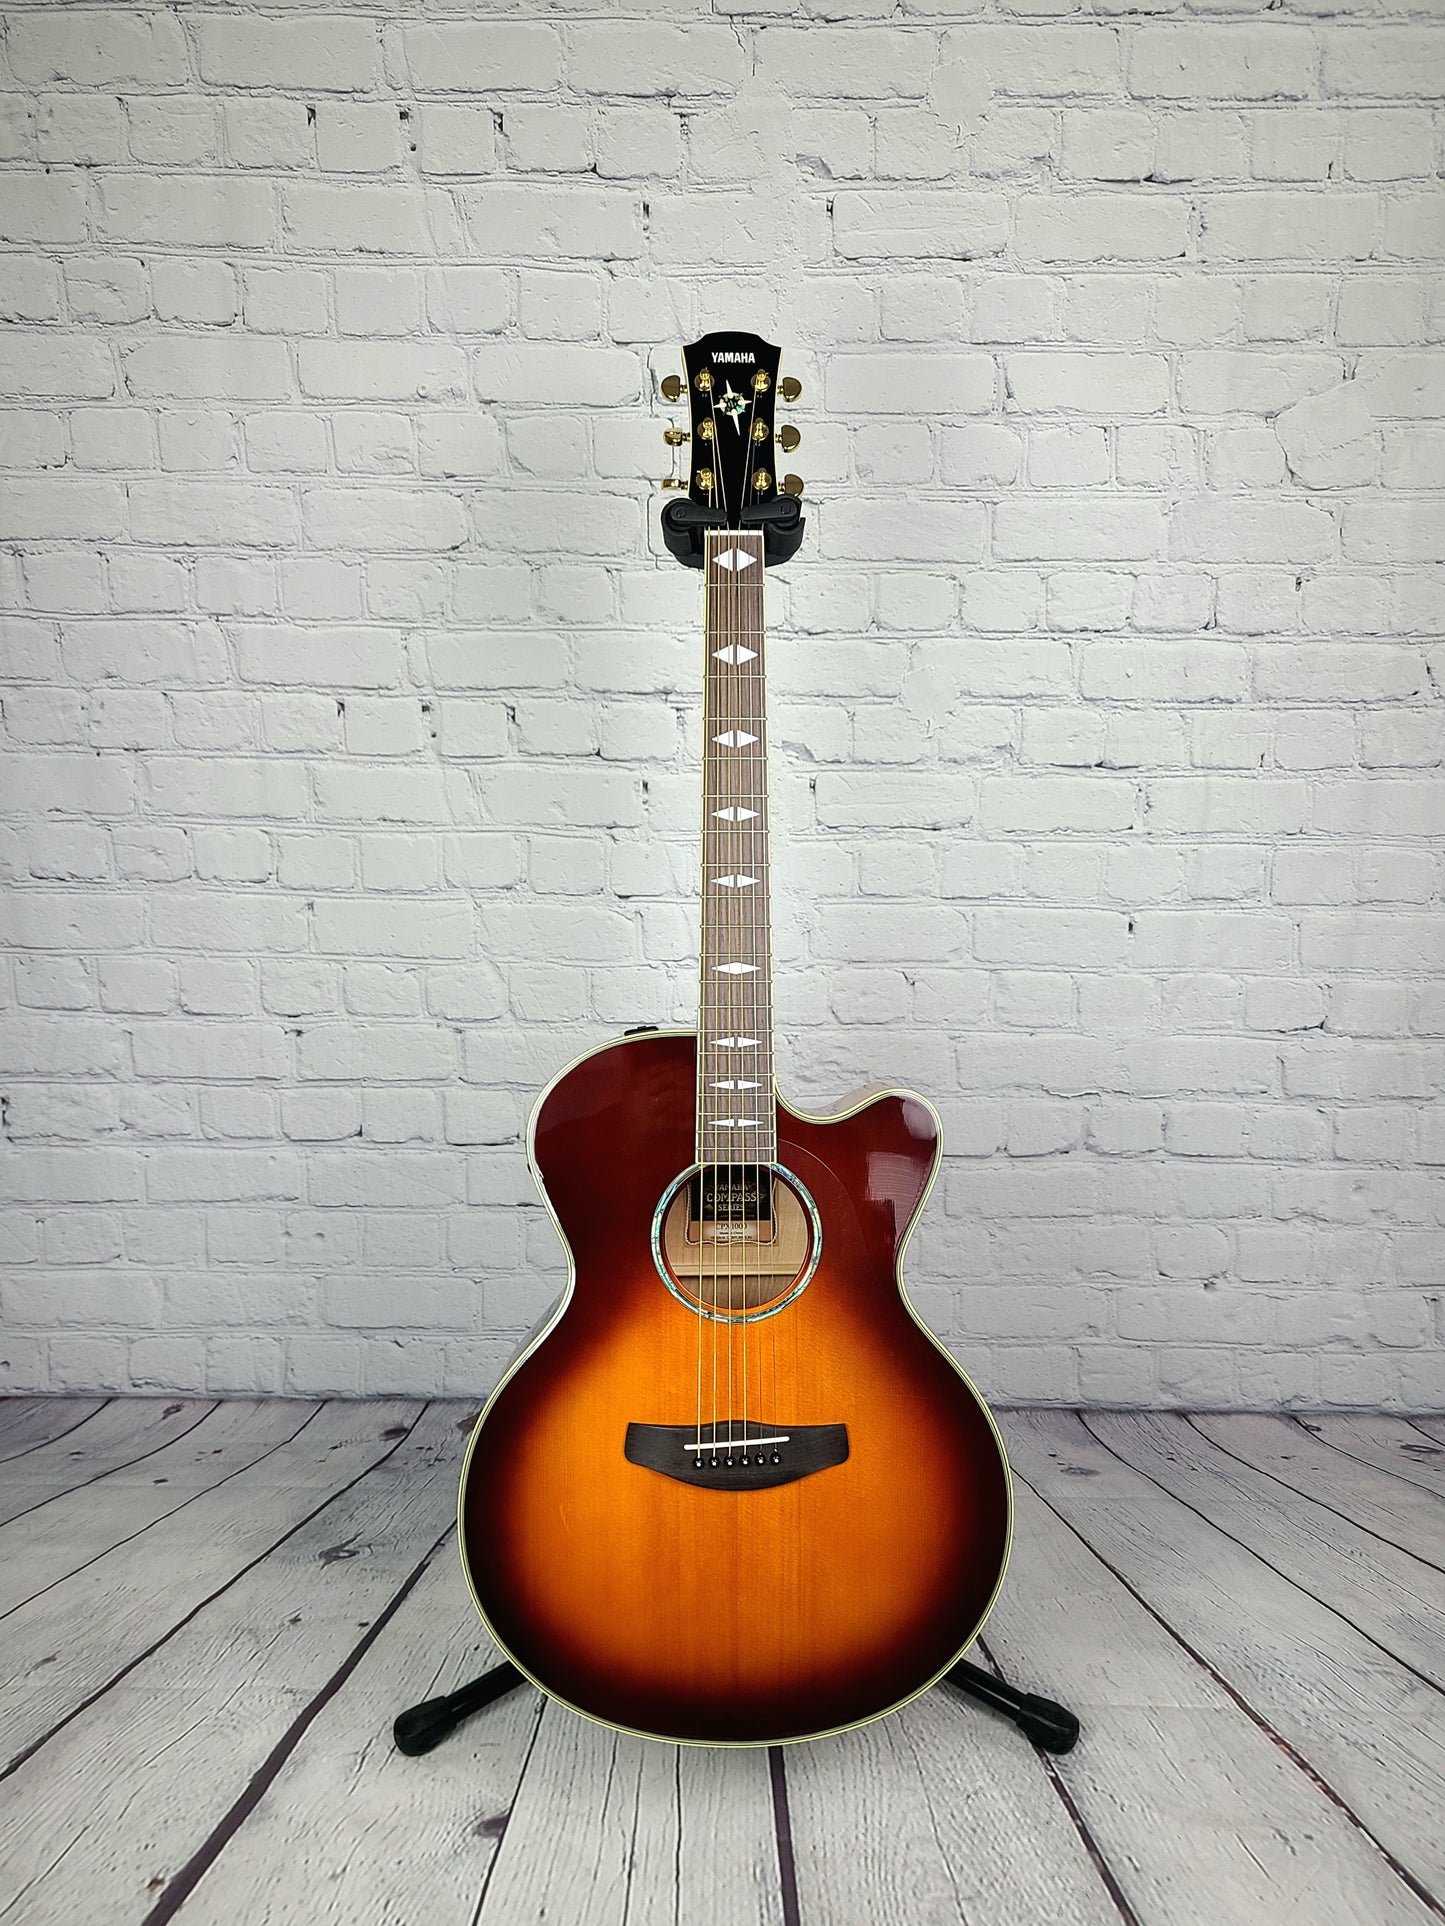 Yamaha CPX-1000 Electric Acoustic Guitar Brown Sunburst